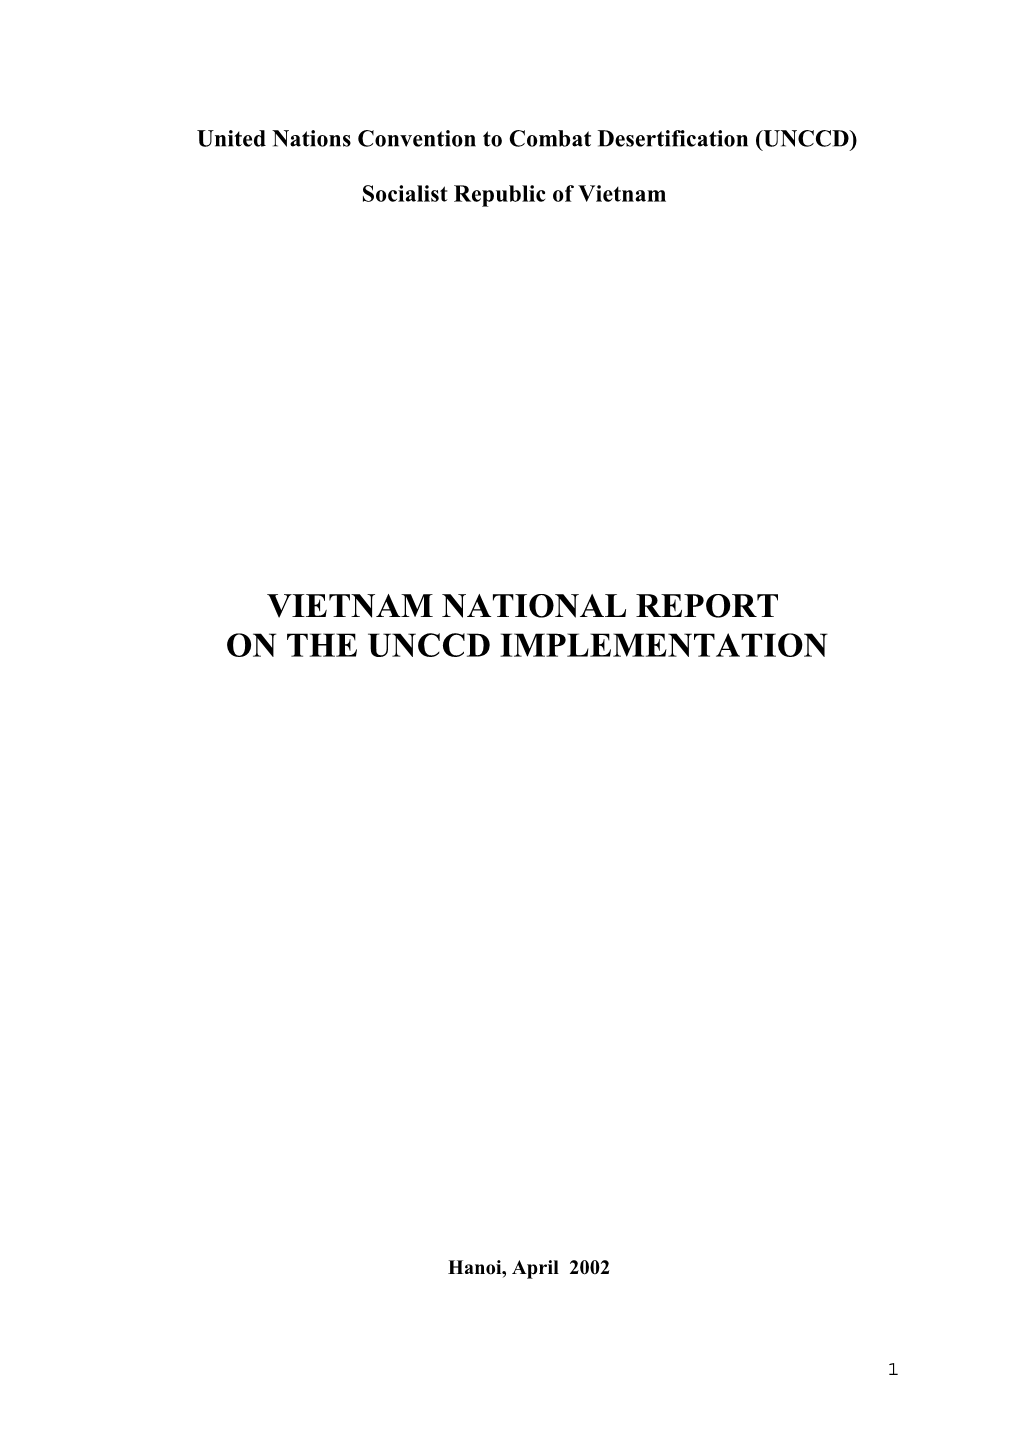 Vietnam National Report on the Unccd Implementation